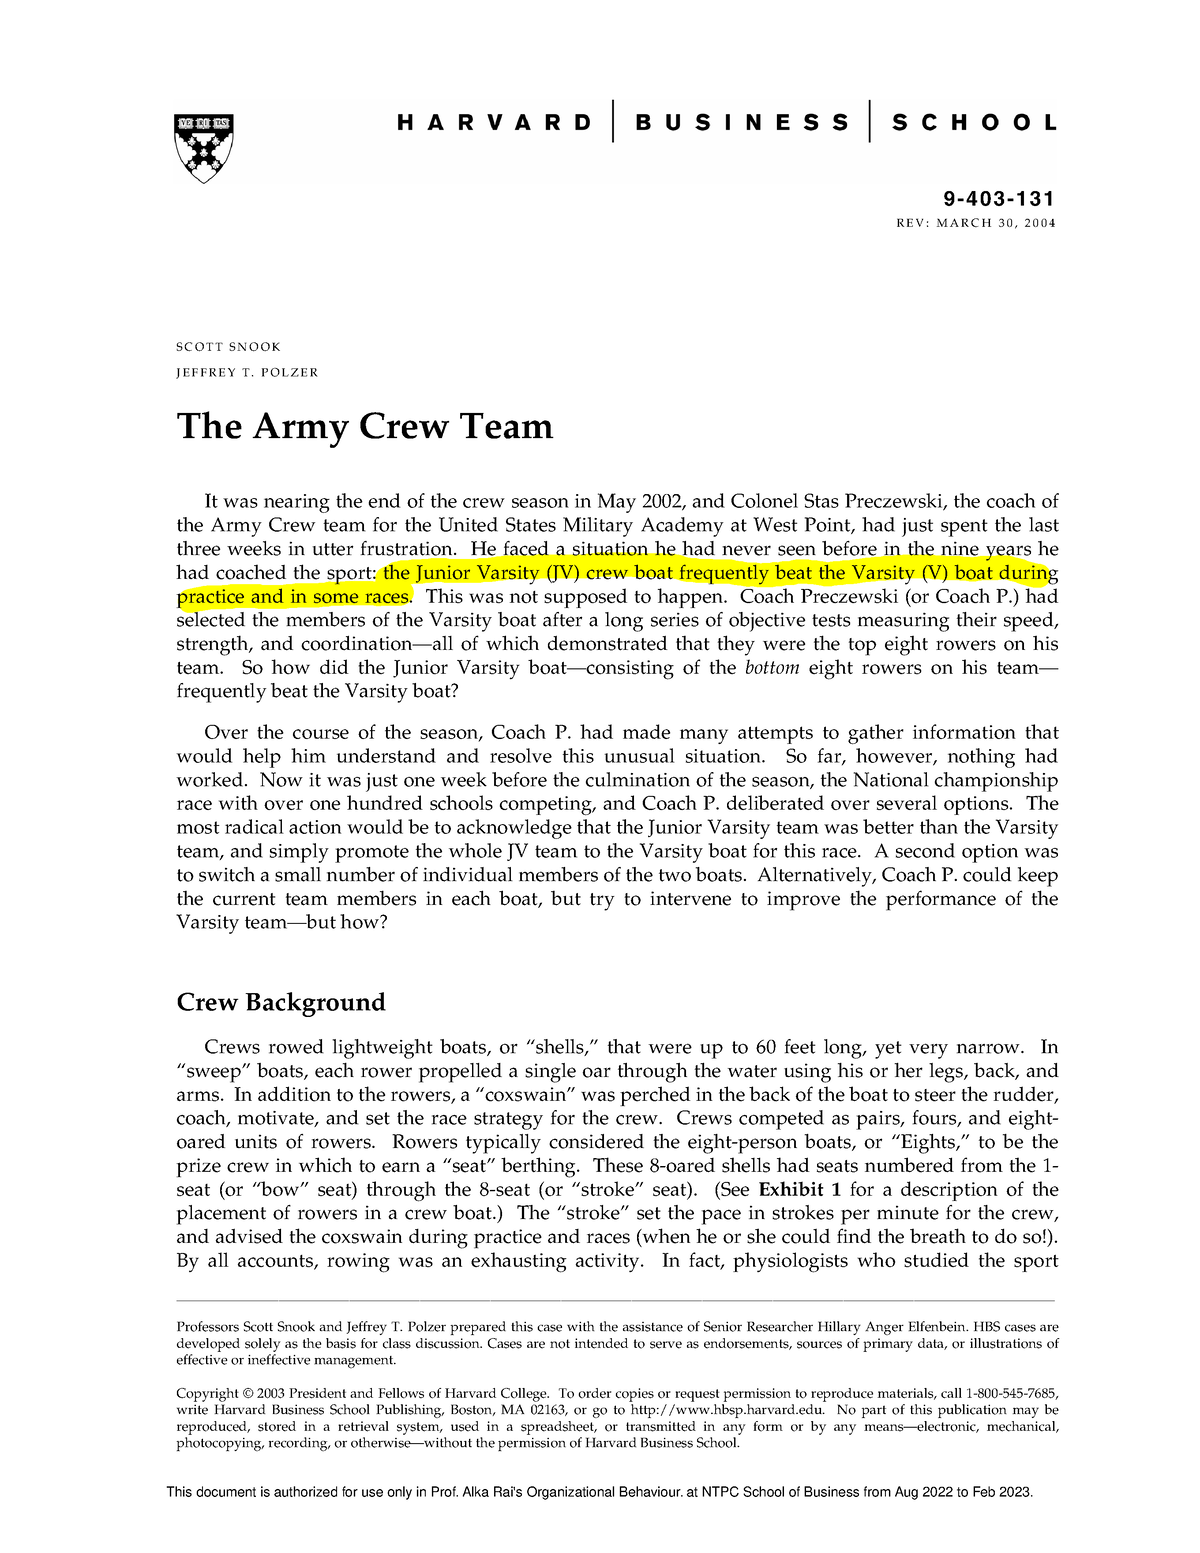 the army crew team harvard business school